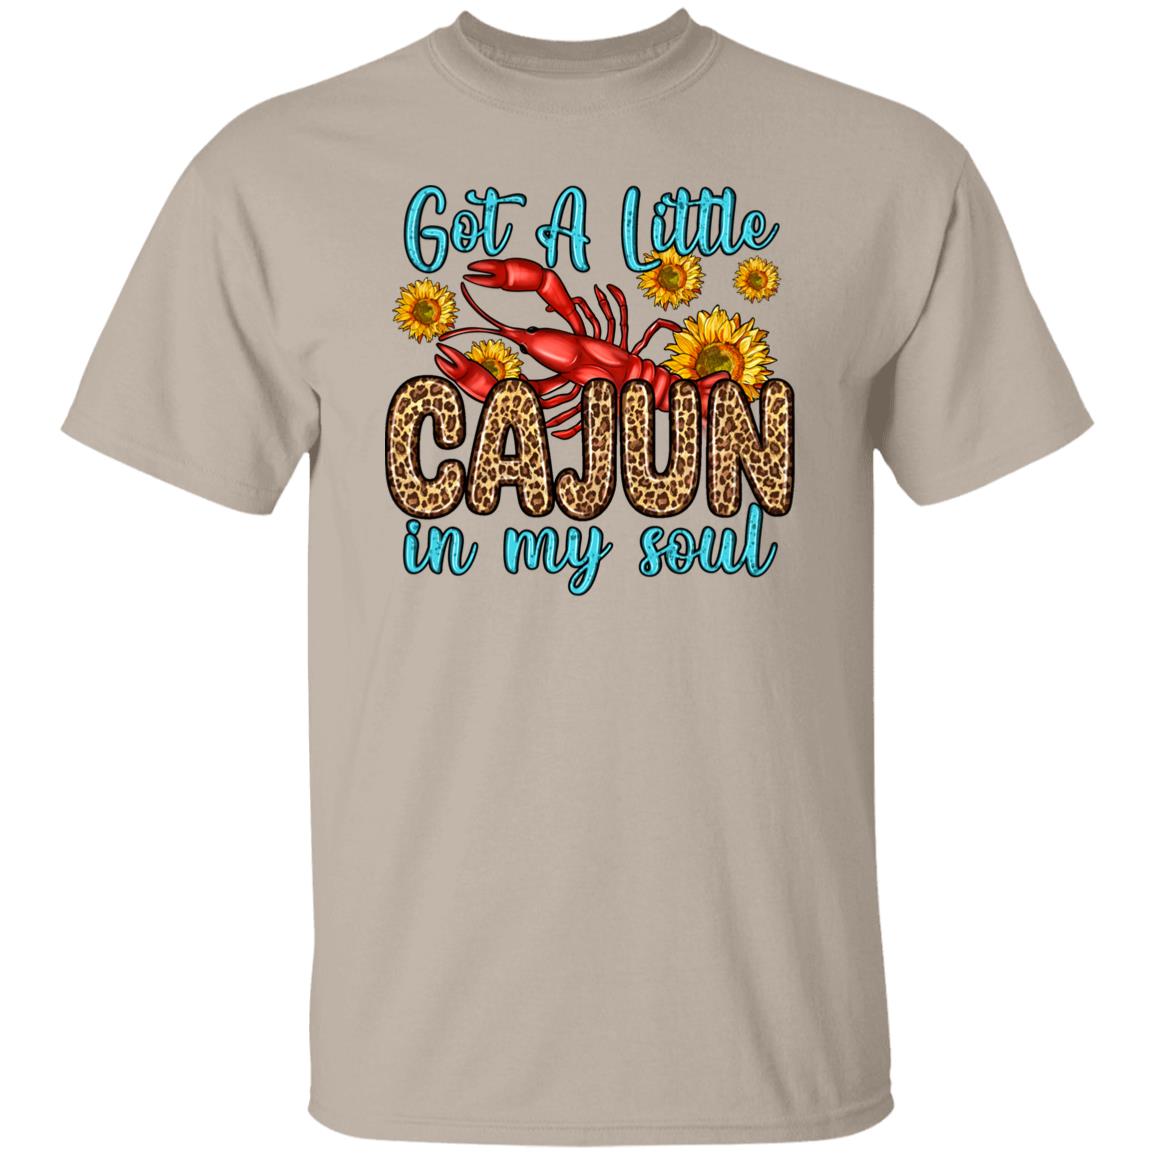 Got a little cajun in my soul T-Shirt gift Crawfish season Unisex tee Sand White Sport Grey-Family-Gift-Planet